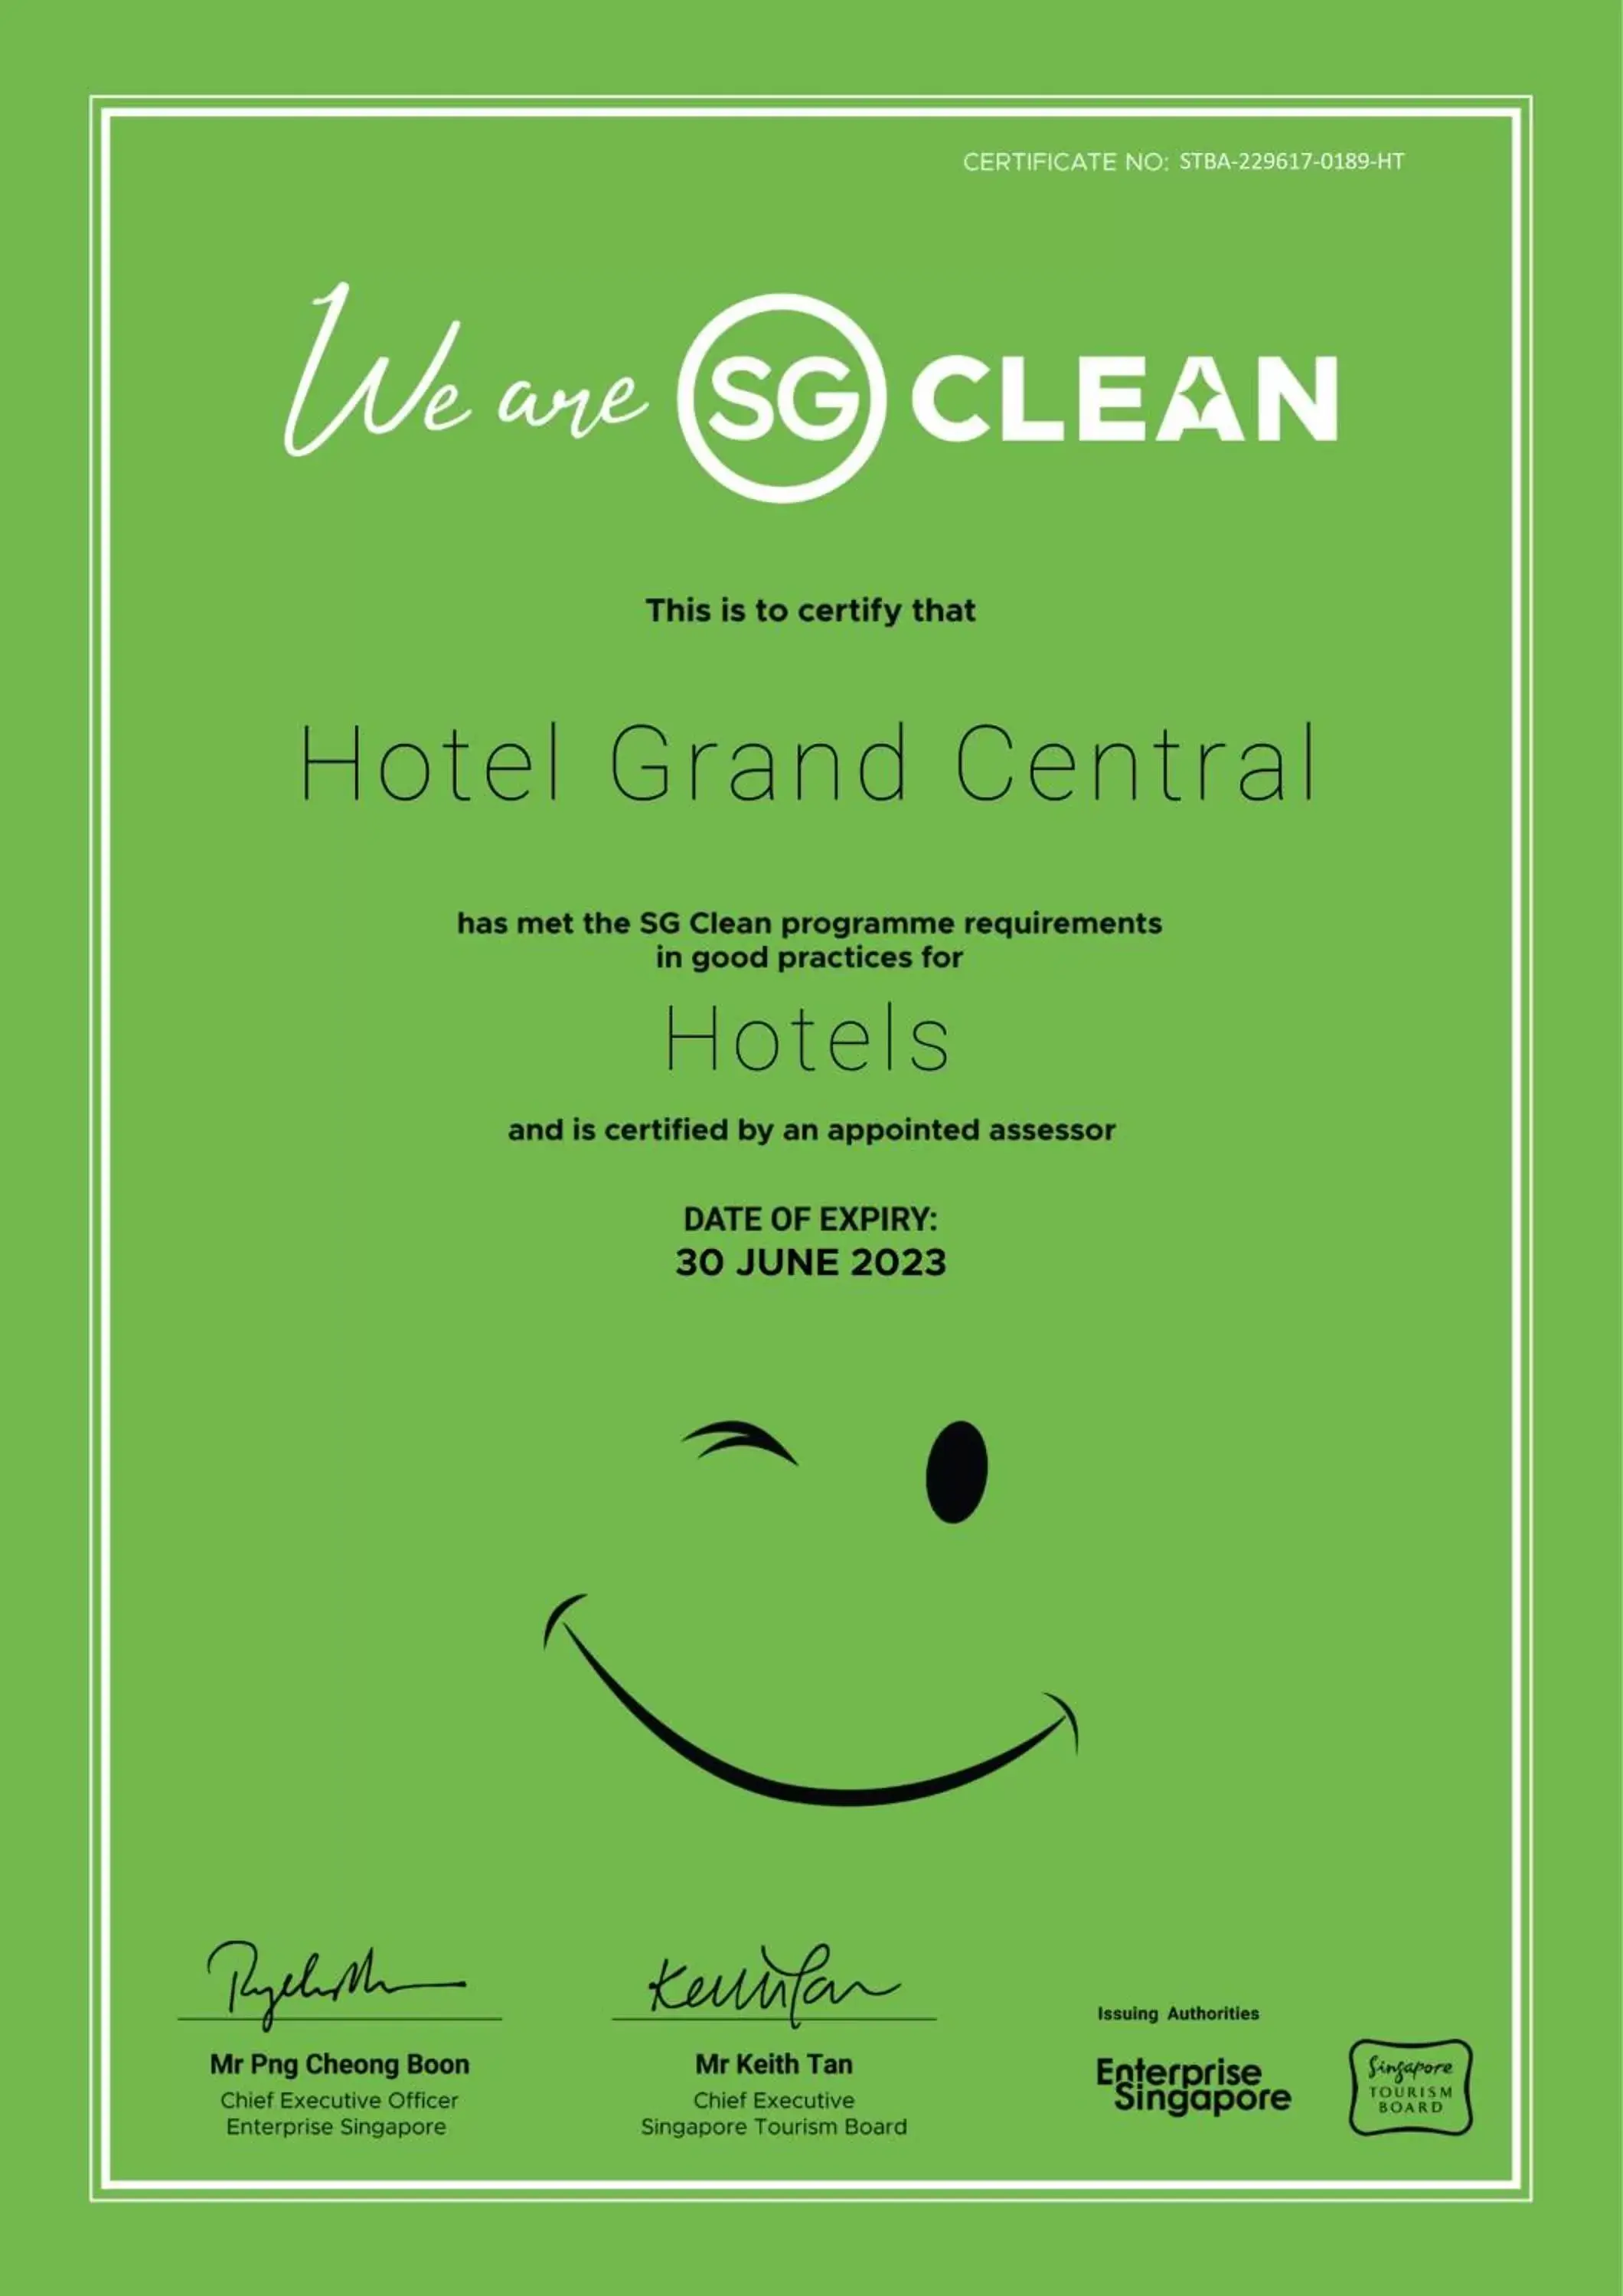 Certificate/Award in Hotel Grand Central